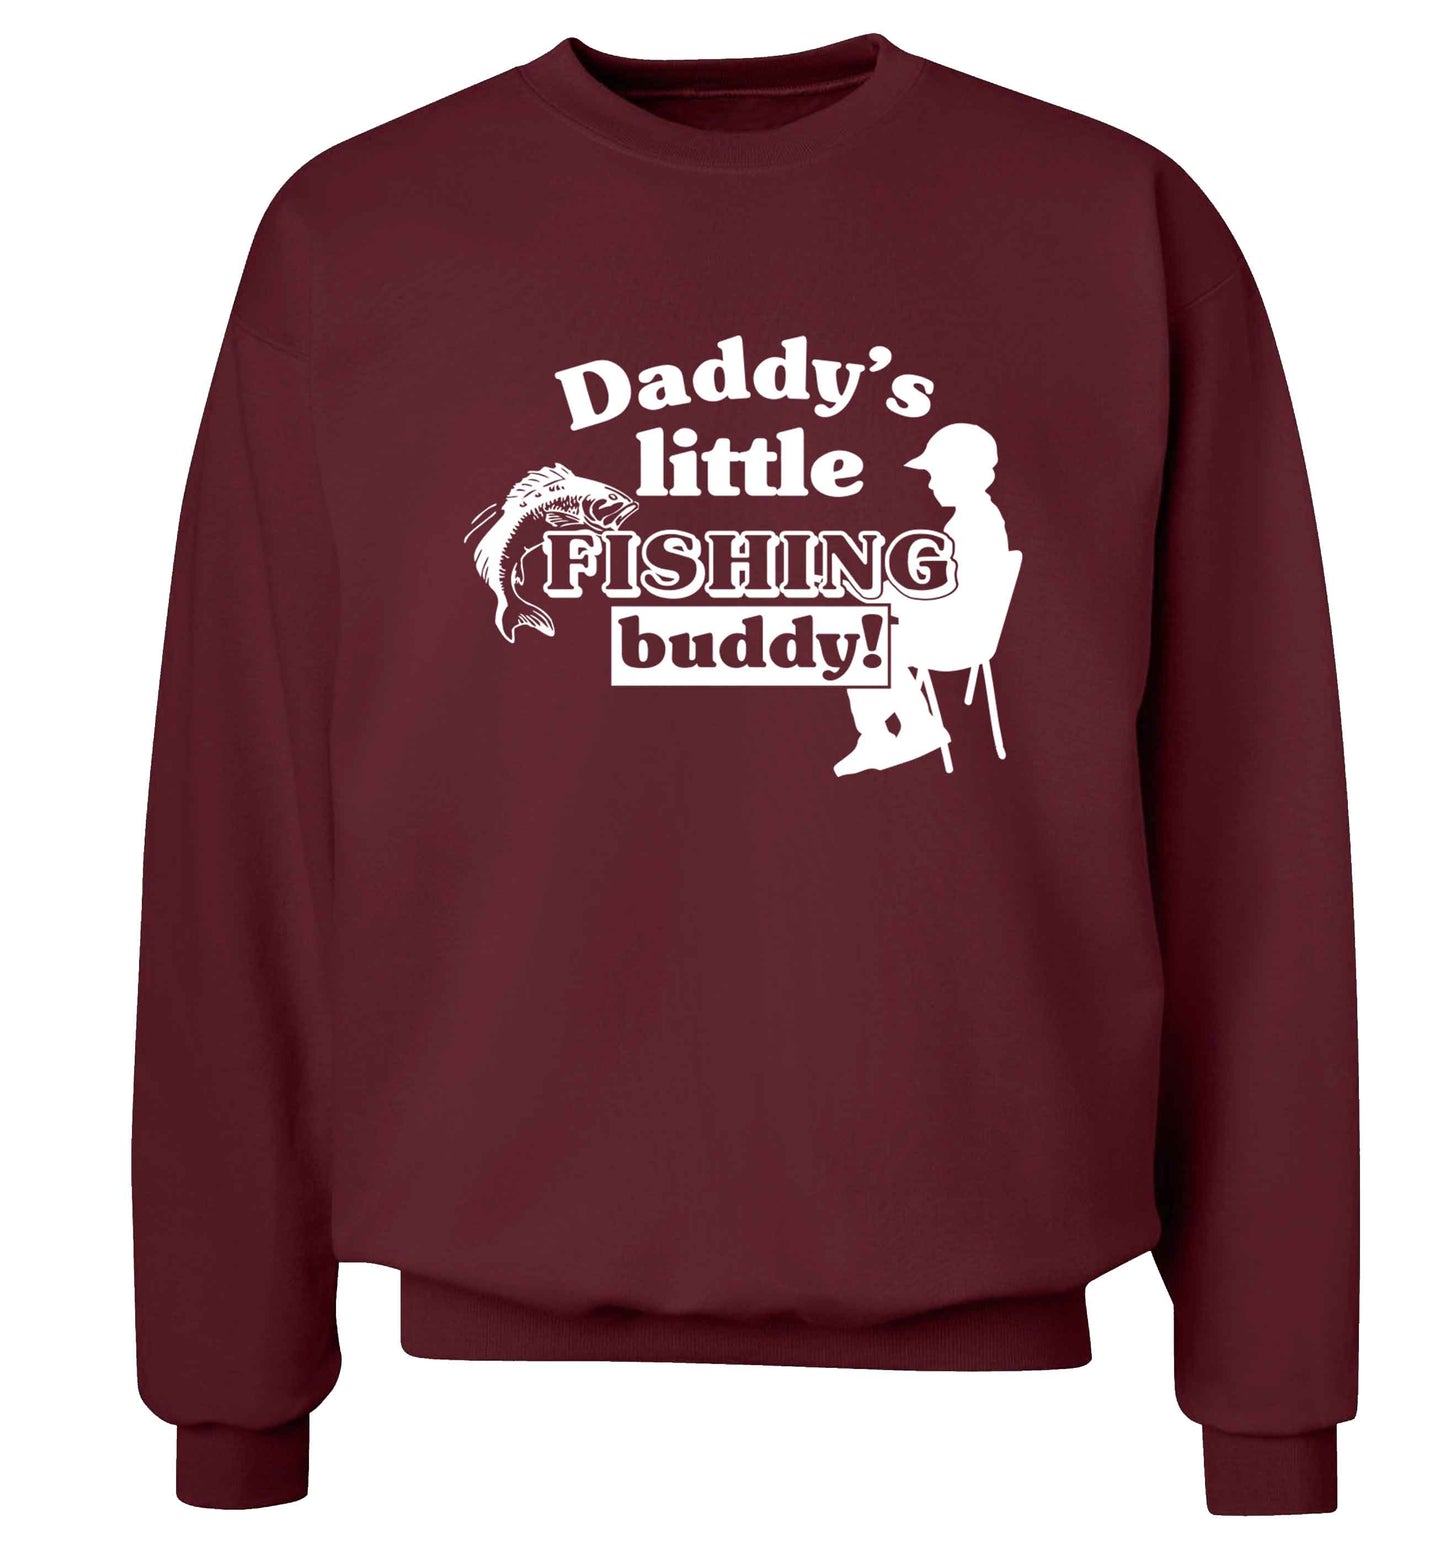 Daddy's little fishing buddy Adult's unisex maroon Sweater 2XL